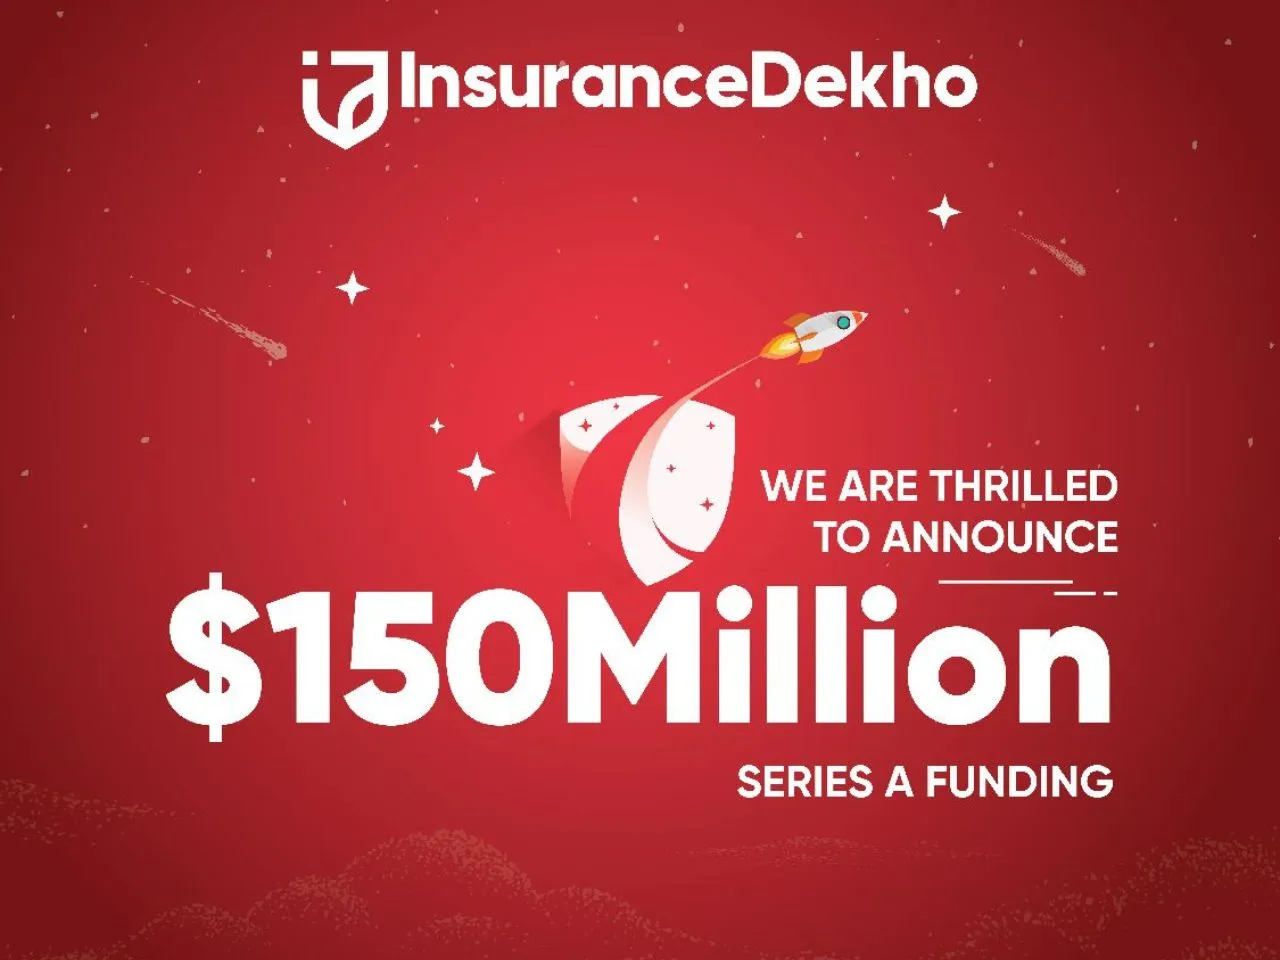 InsuranceDekho Raises $150M In Series A Funding Round